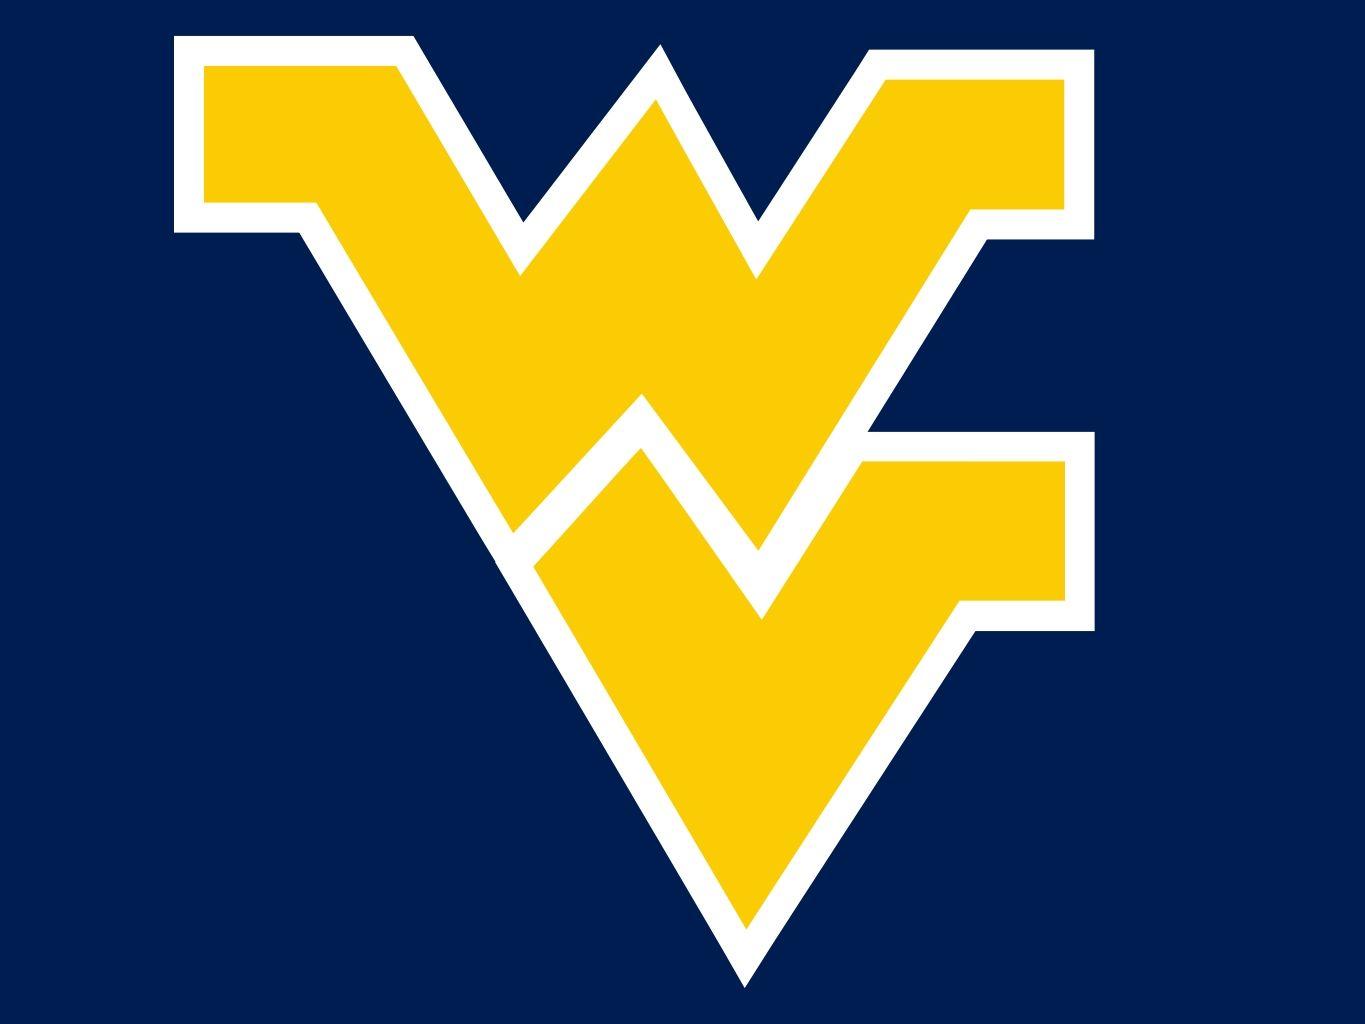 West Virginia Football Logo - West Virginia Mountaineers | NCAA Football Wiki | FANDOM powered by ...